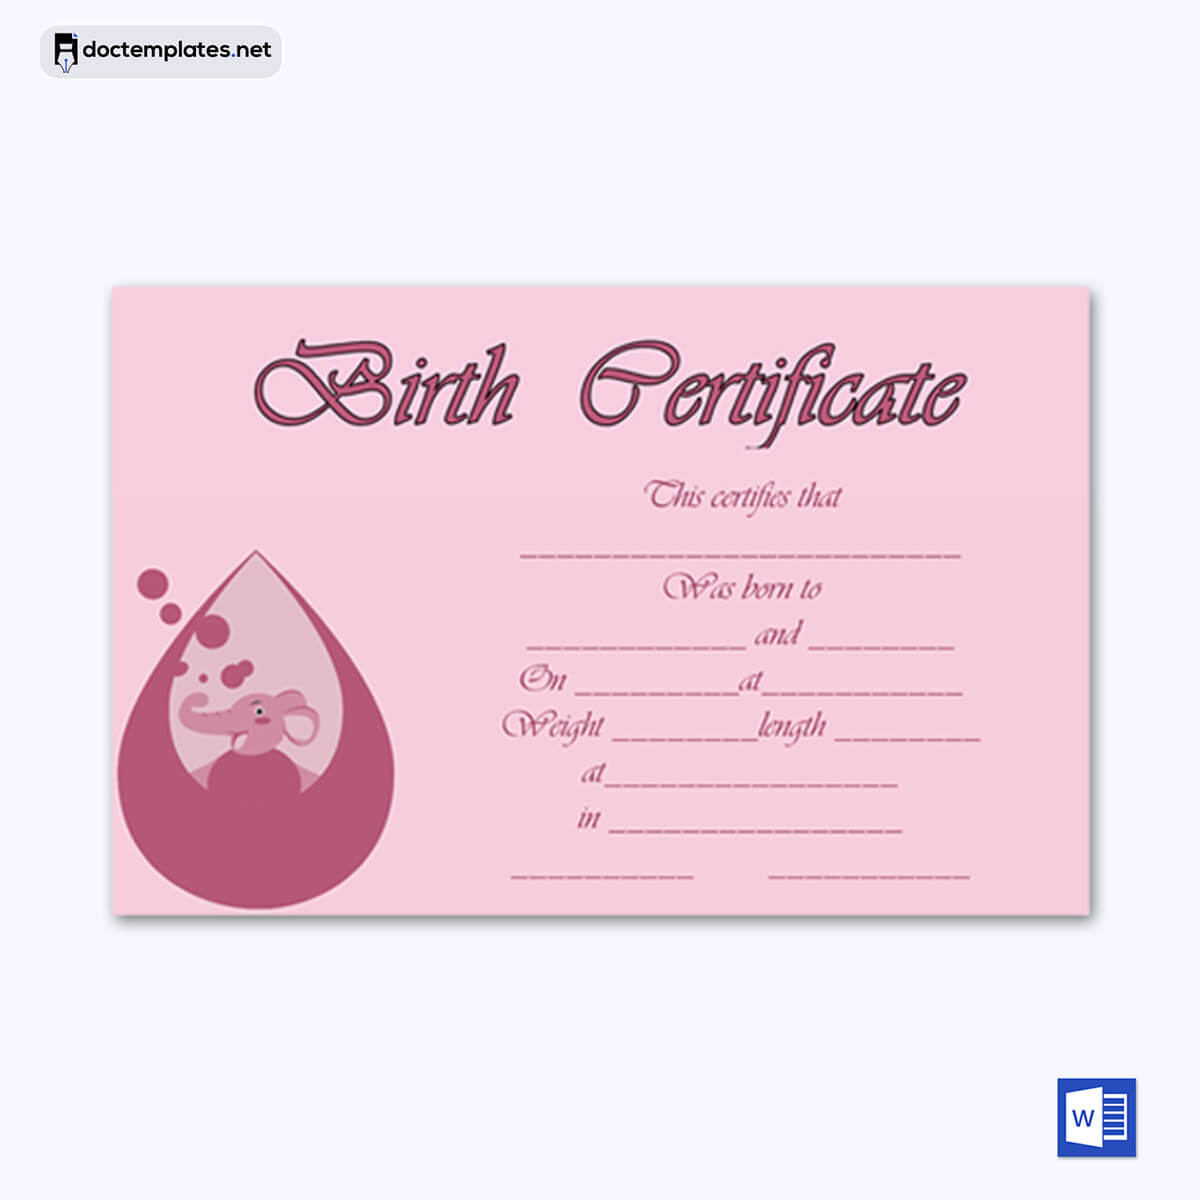 
birth certificate template google docs 07